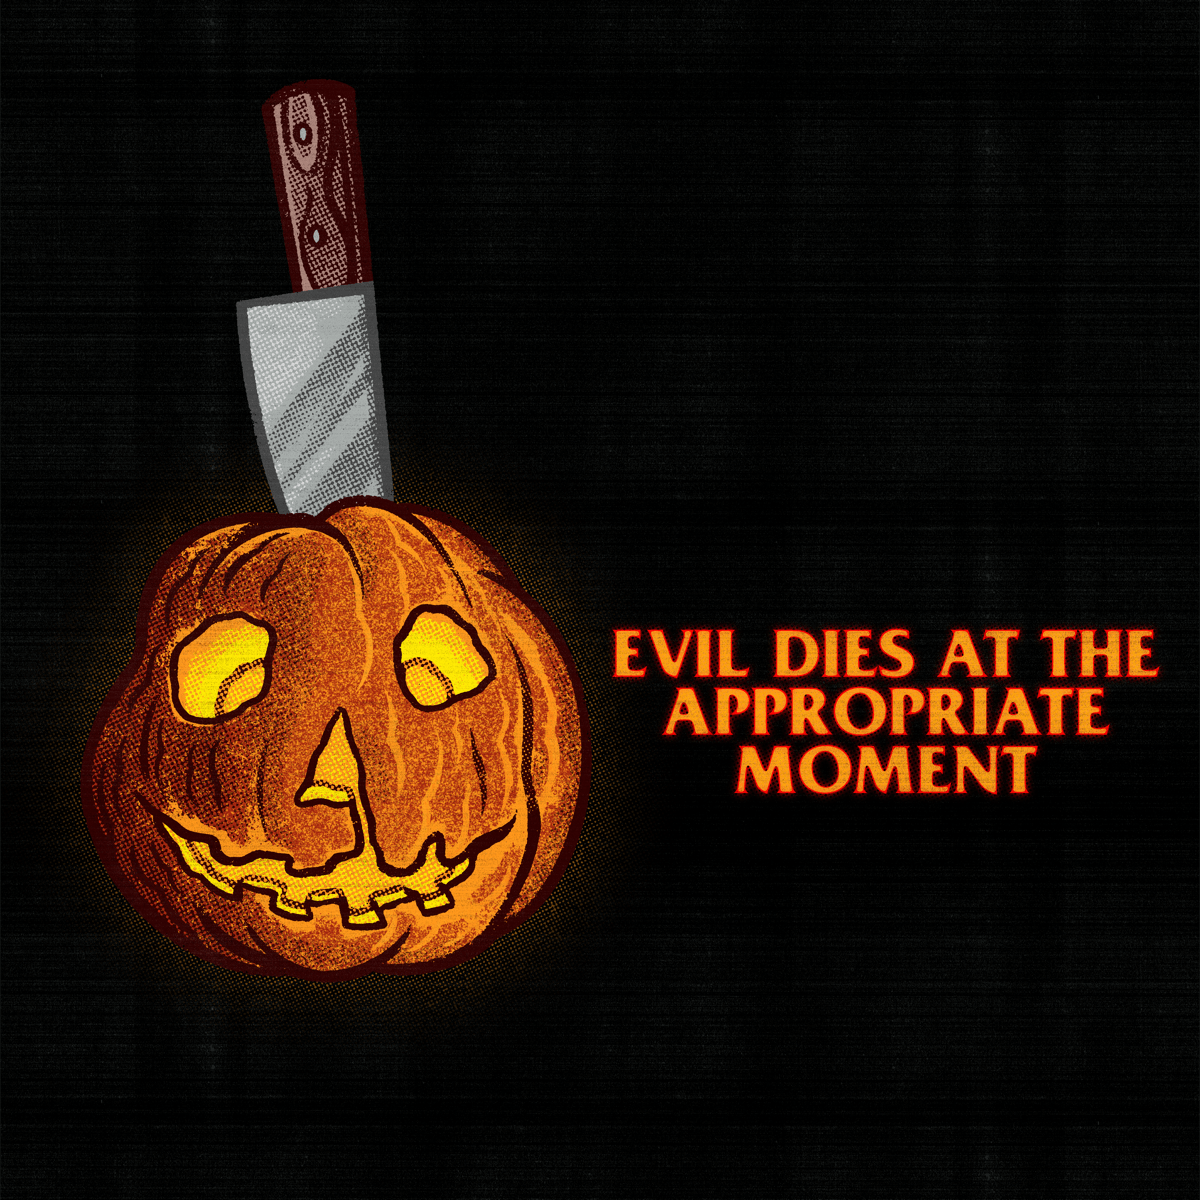 Evil Dies in 215 Nights!
#HalloweenKills